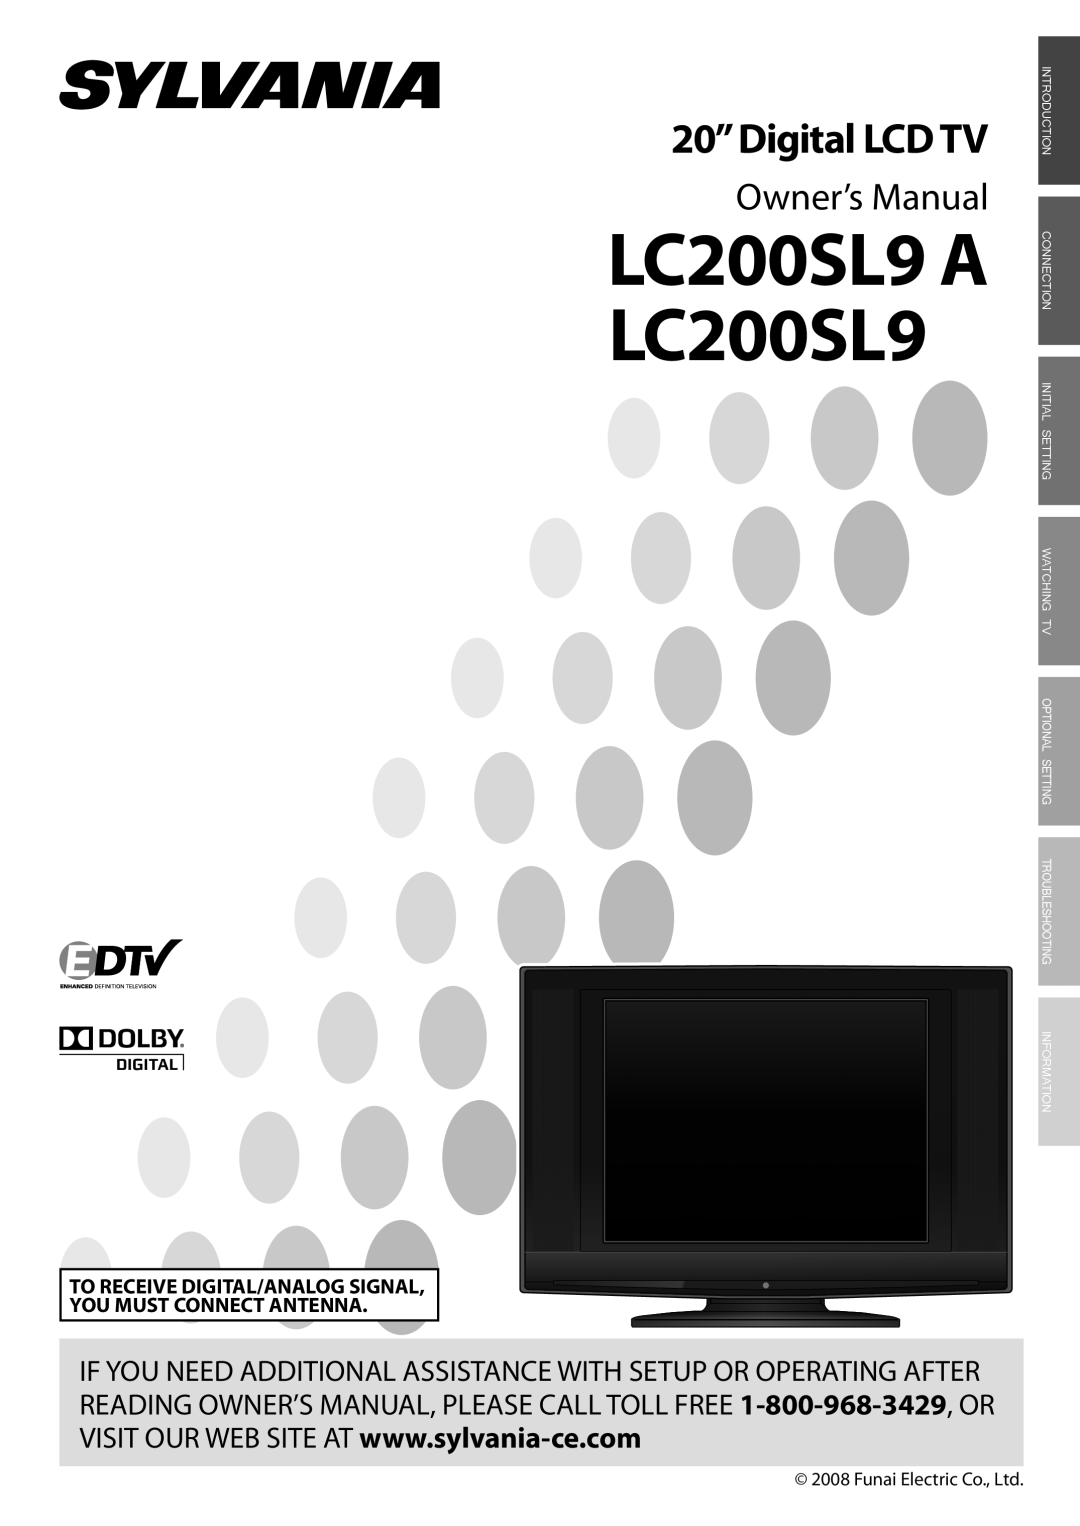 Sylvania owner manual LC200SL9 A LC200SL9, Owner’s Manual, 20”Digital LCD TV 